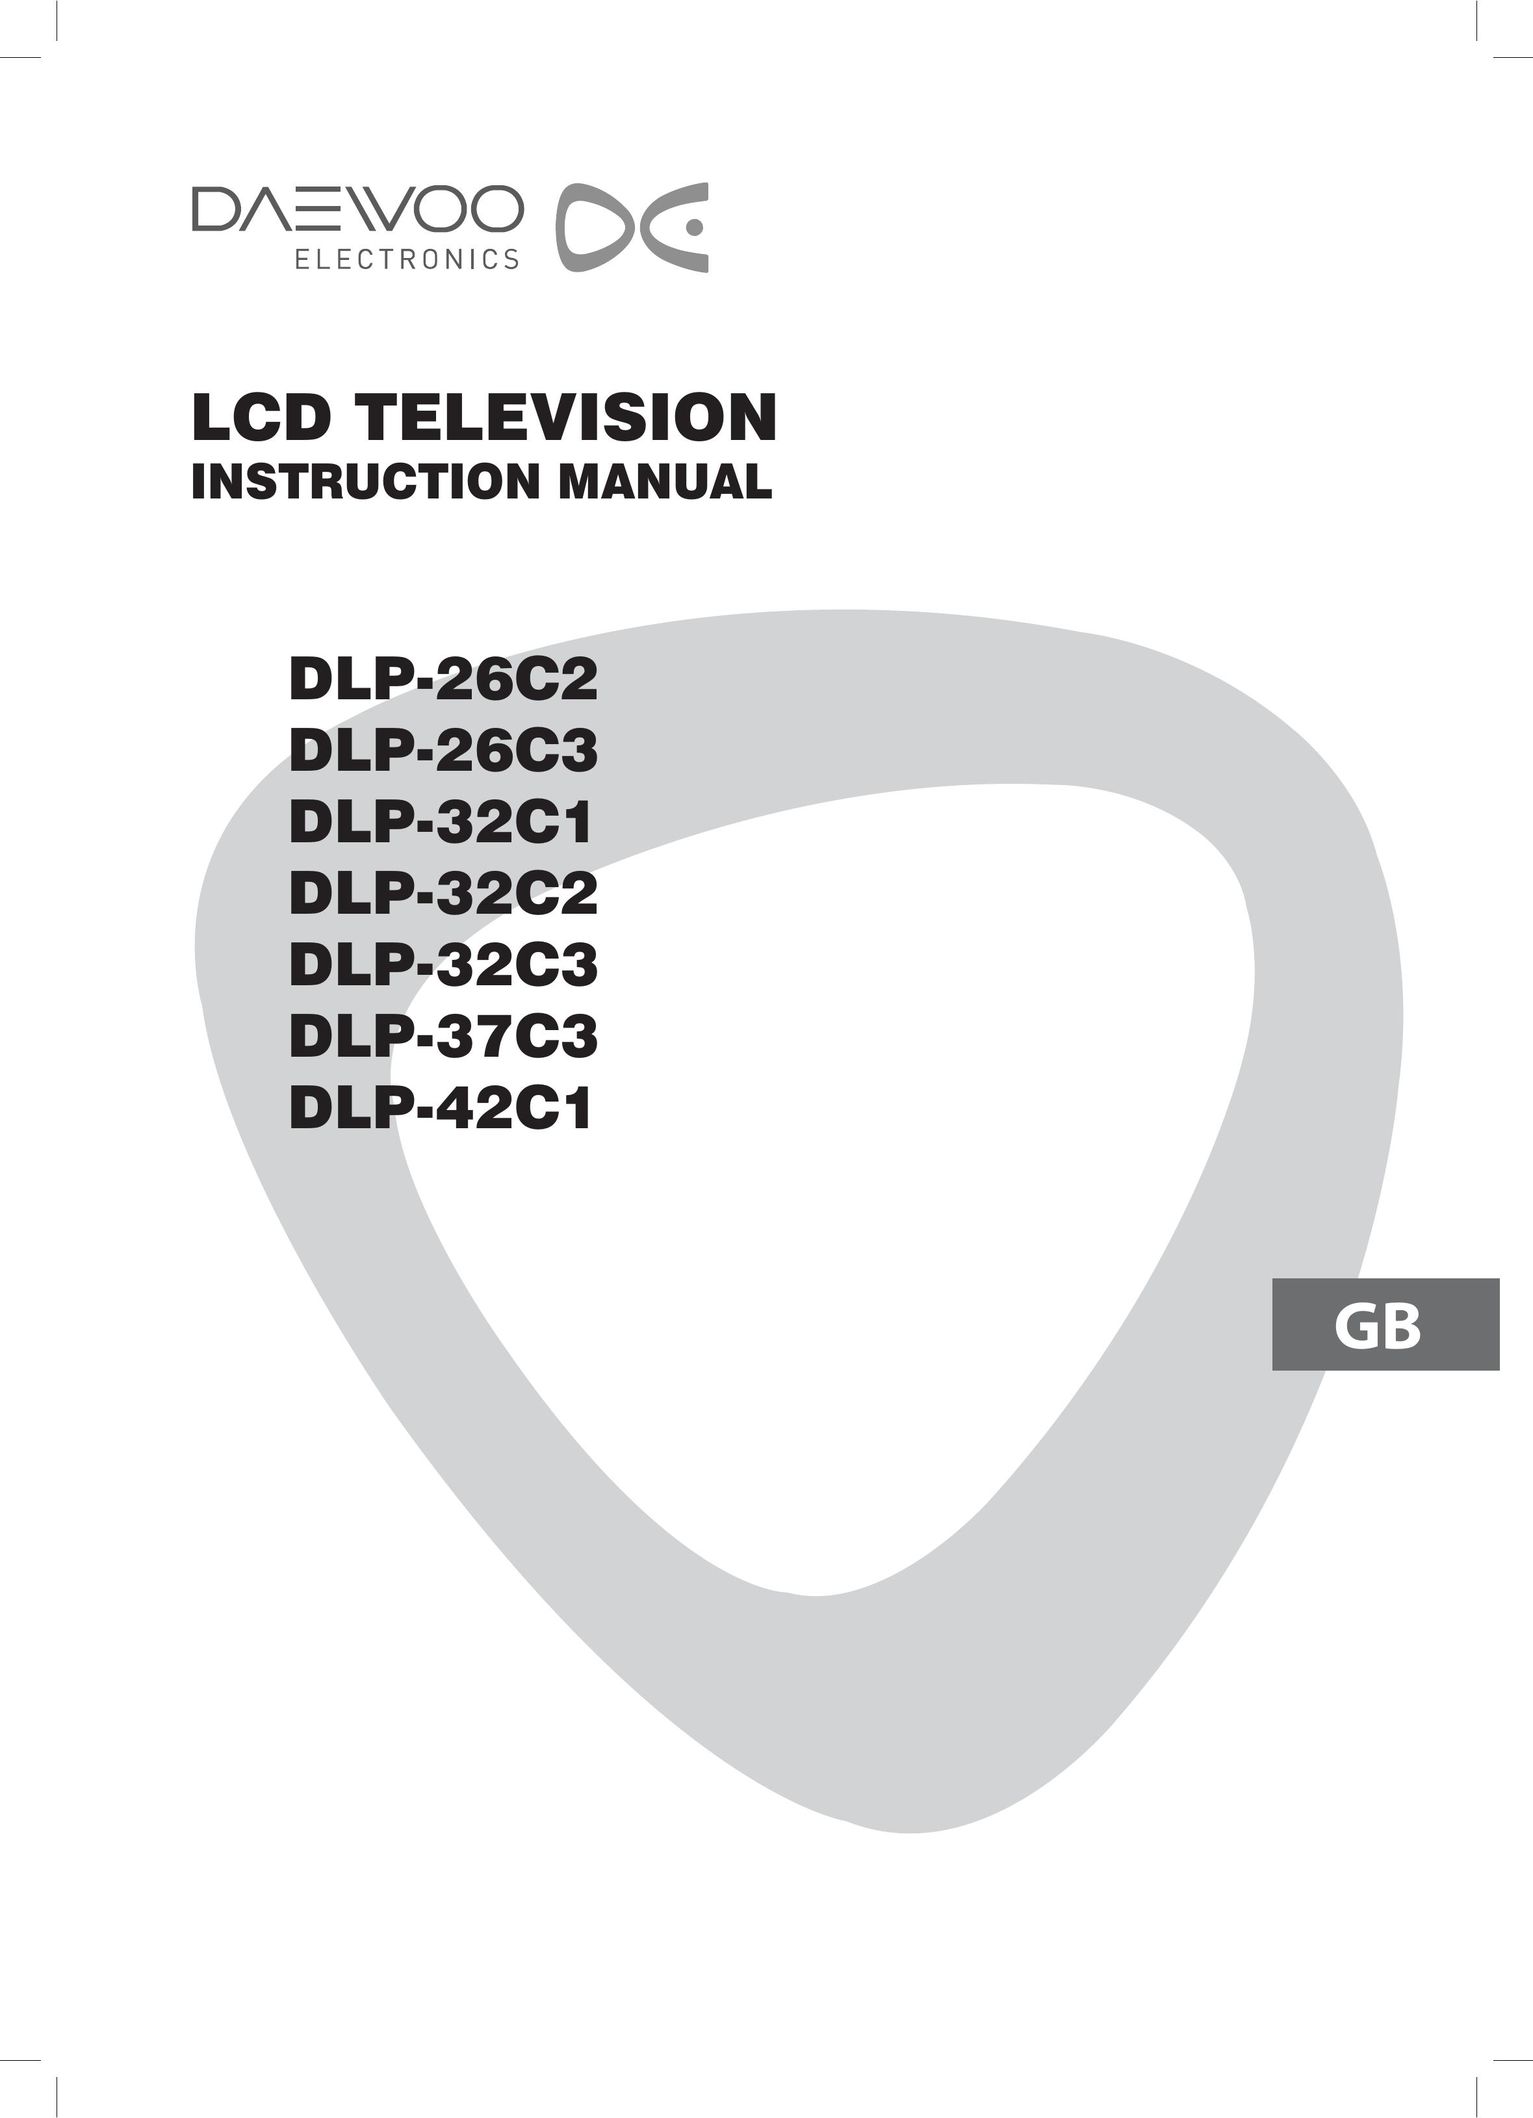 Daewoo DLP-37C3 Flat Panel Television User Manual